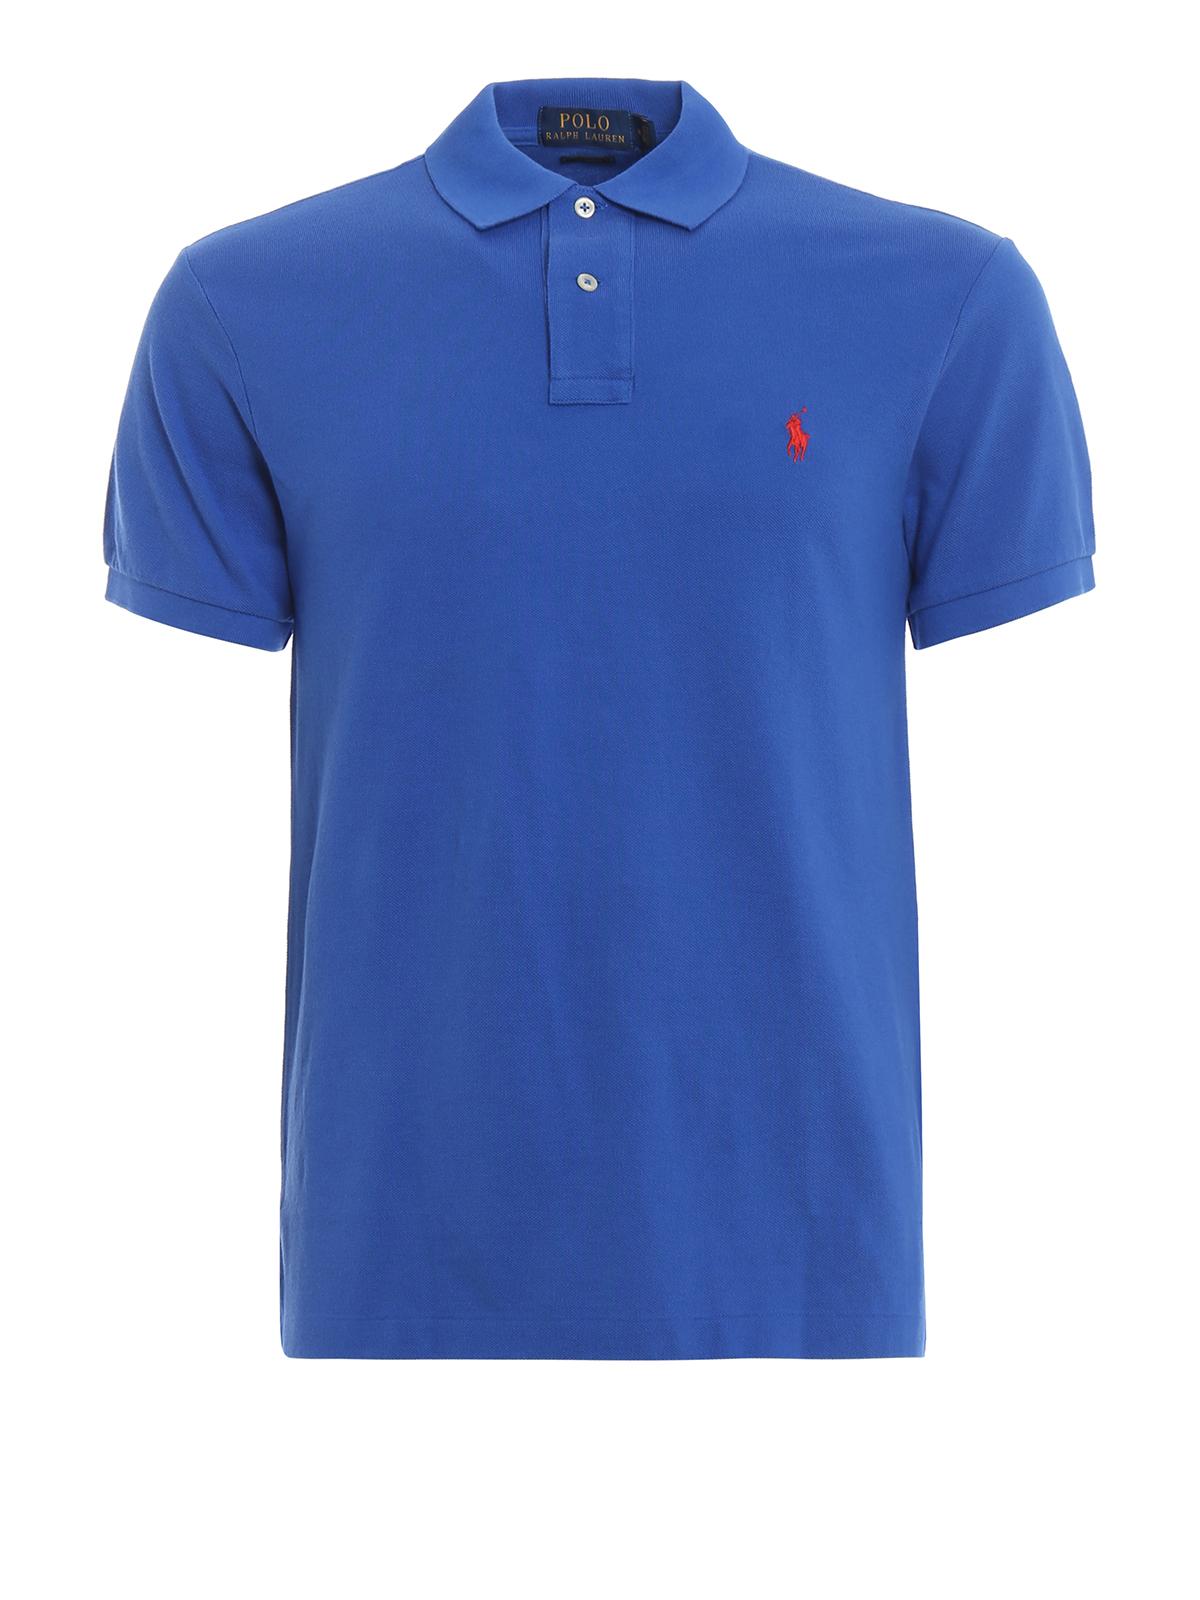 Polo Ralph Lauren Classic Blue Polo Shirt In Pique Cotton for Men - Lyst